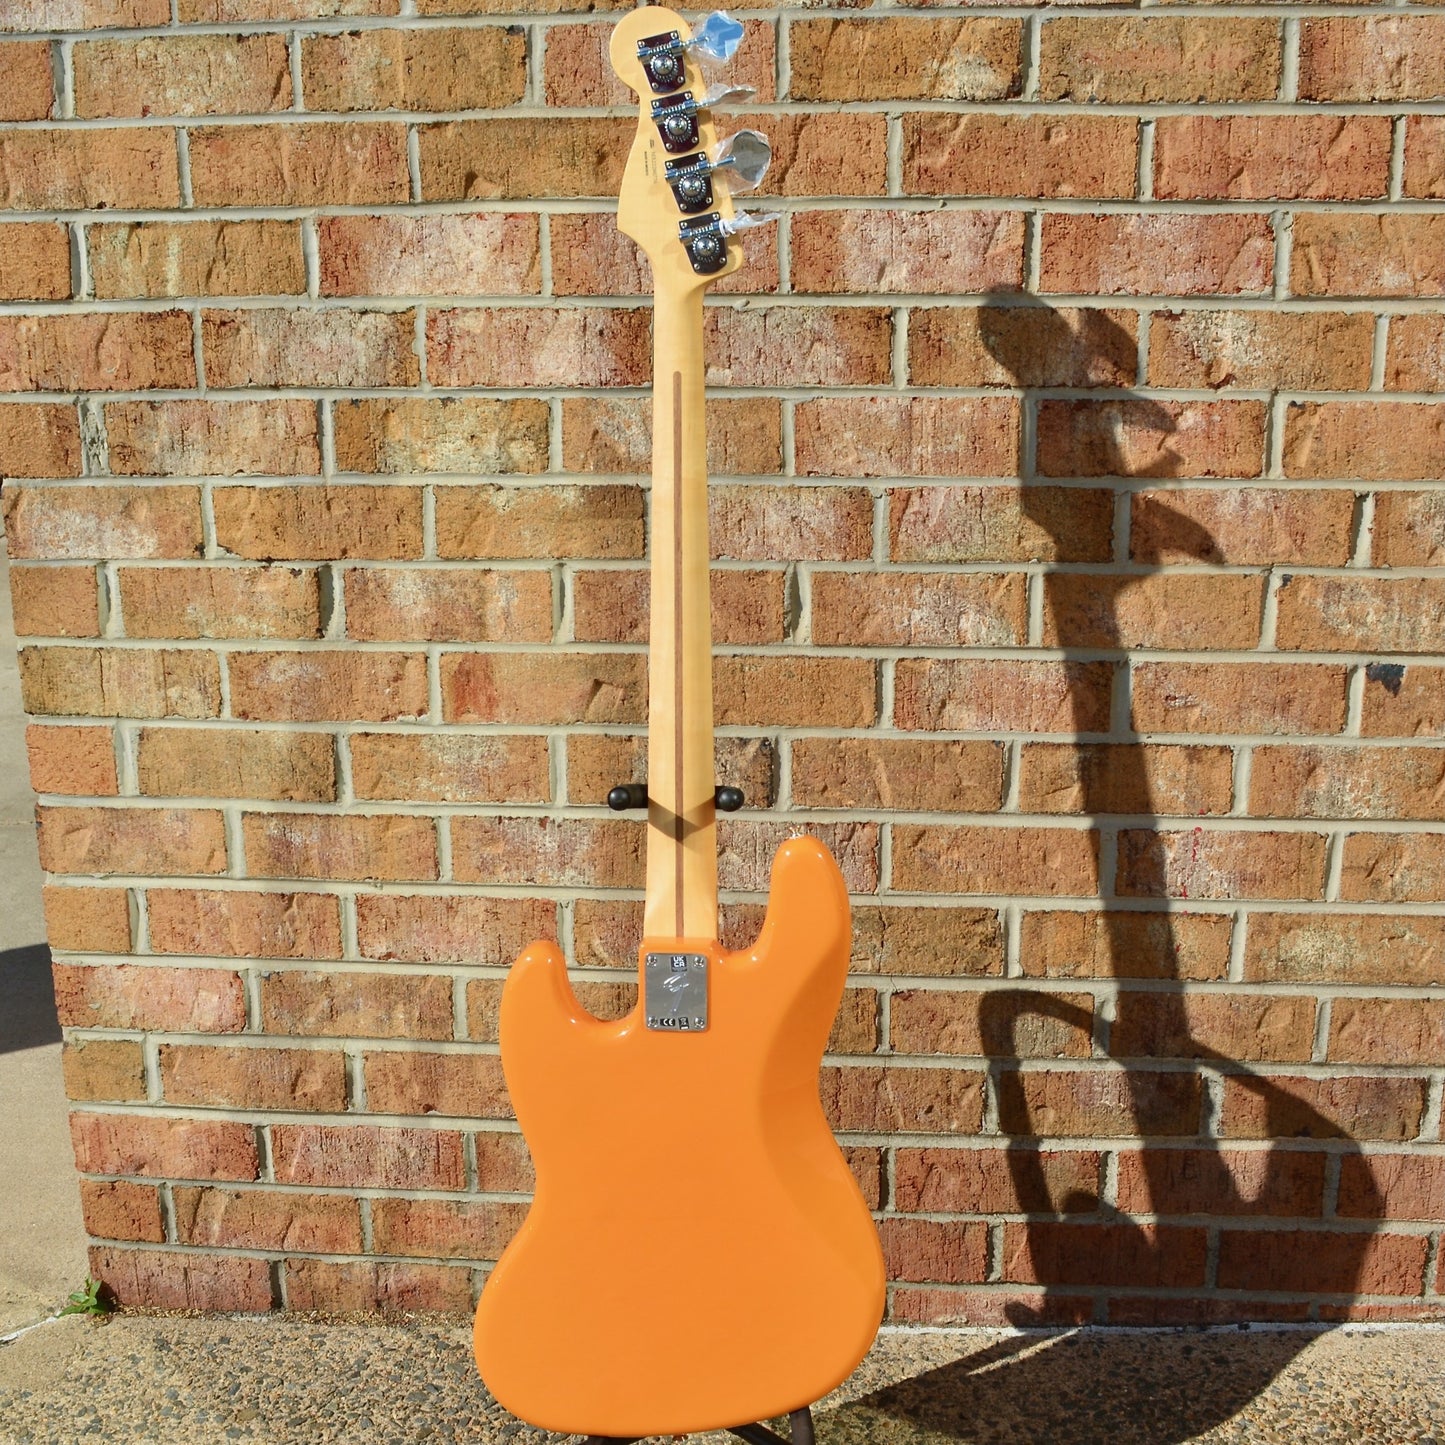 Fender Player Jazz Bass®, Pau Ferro Fingerboard, Capri Orange